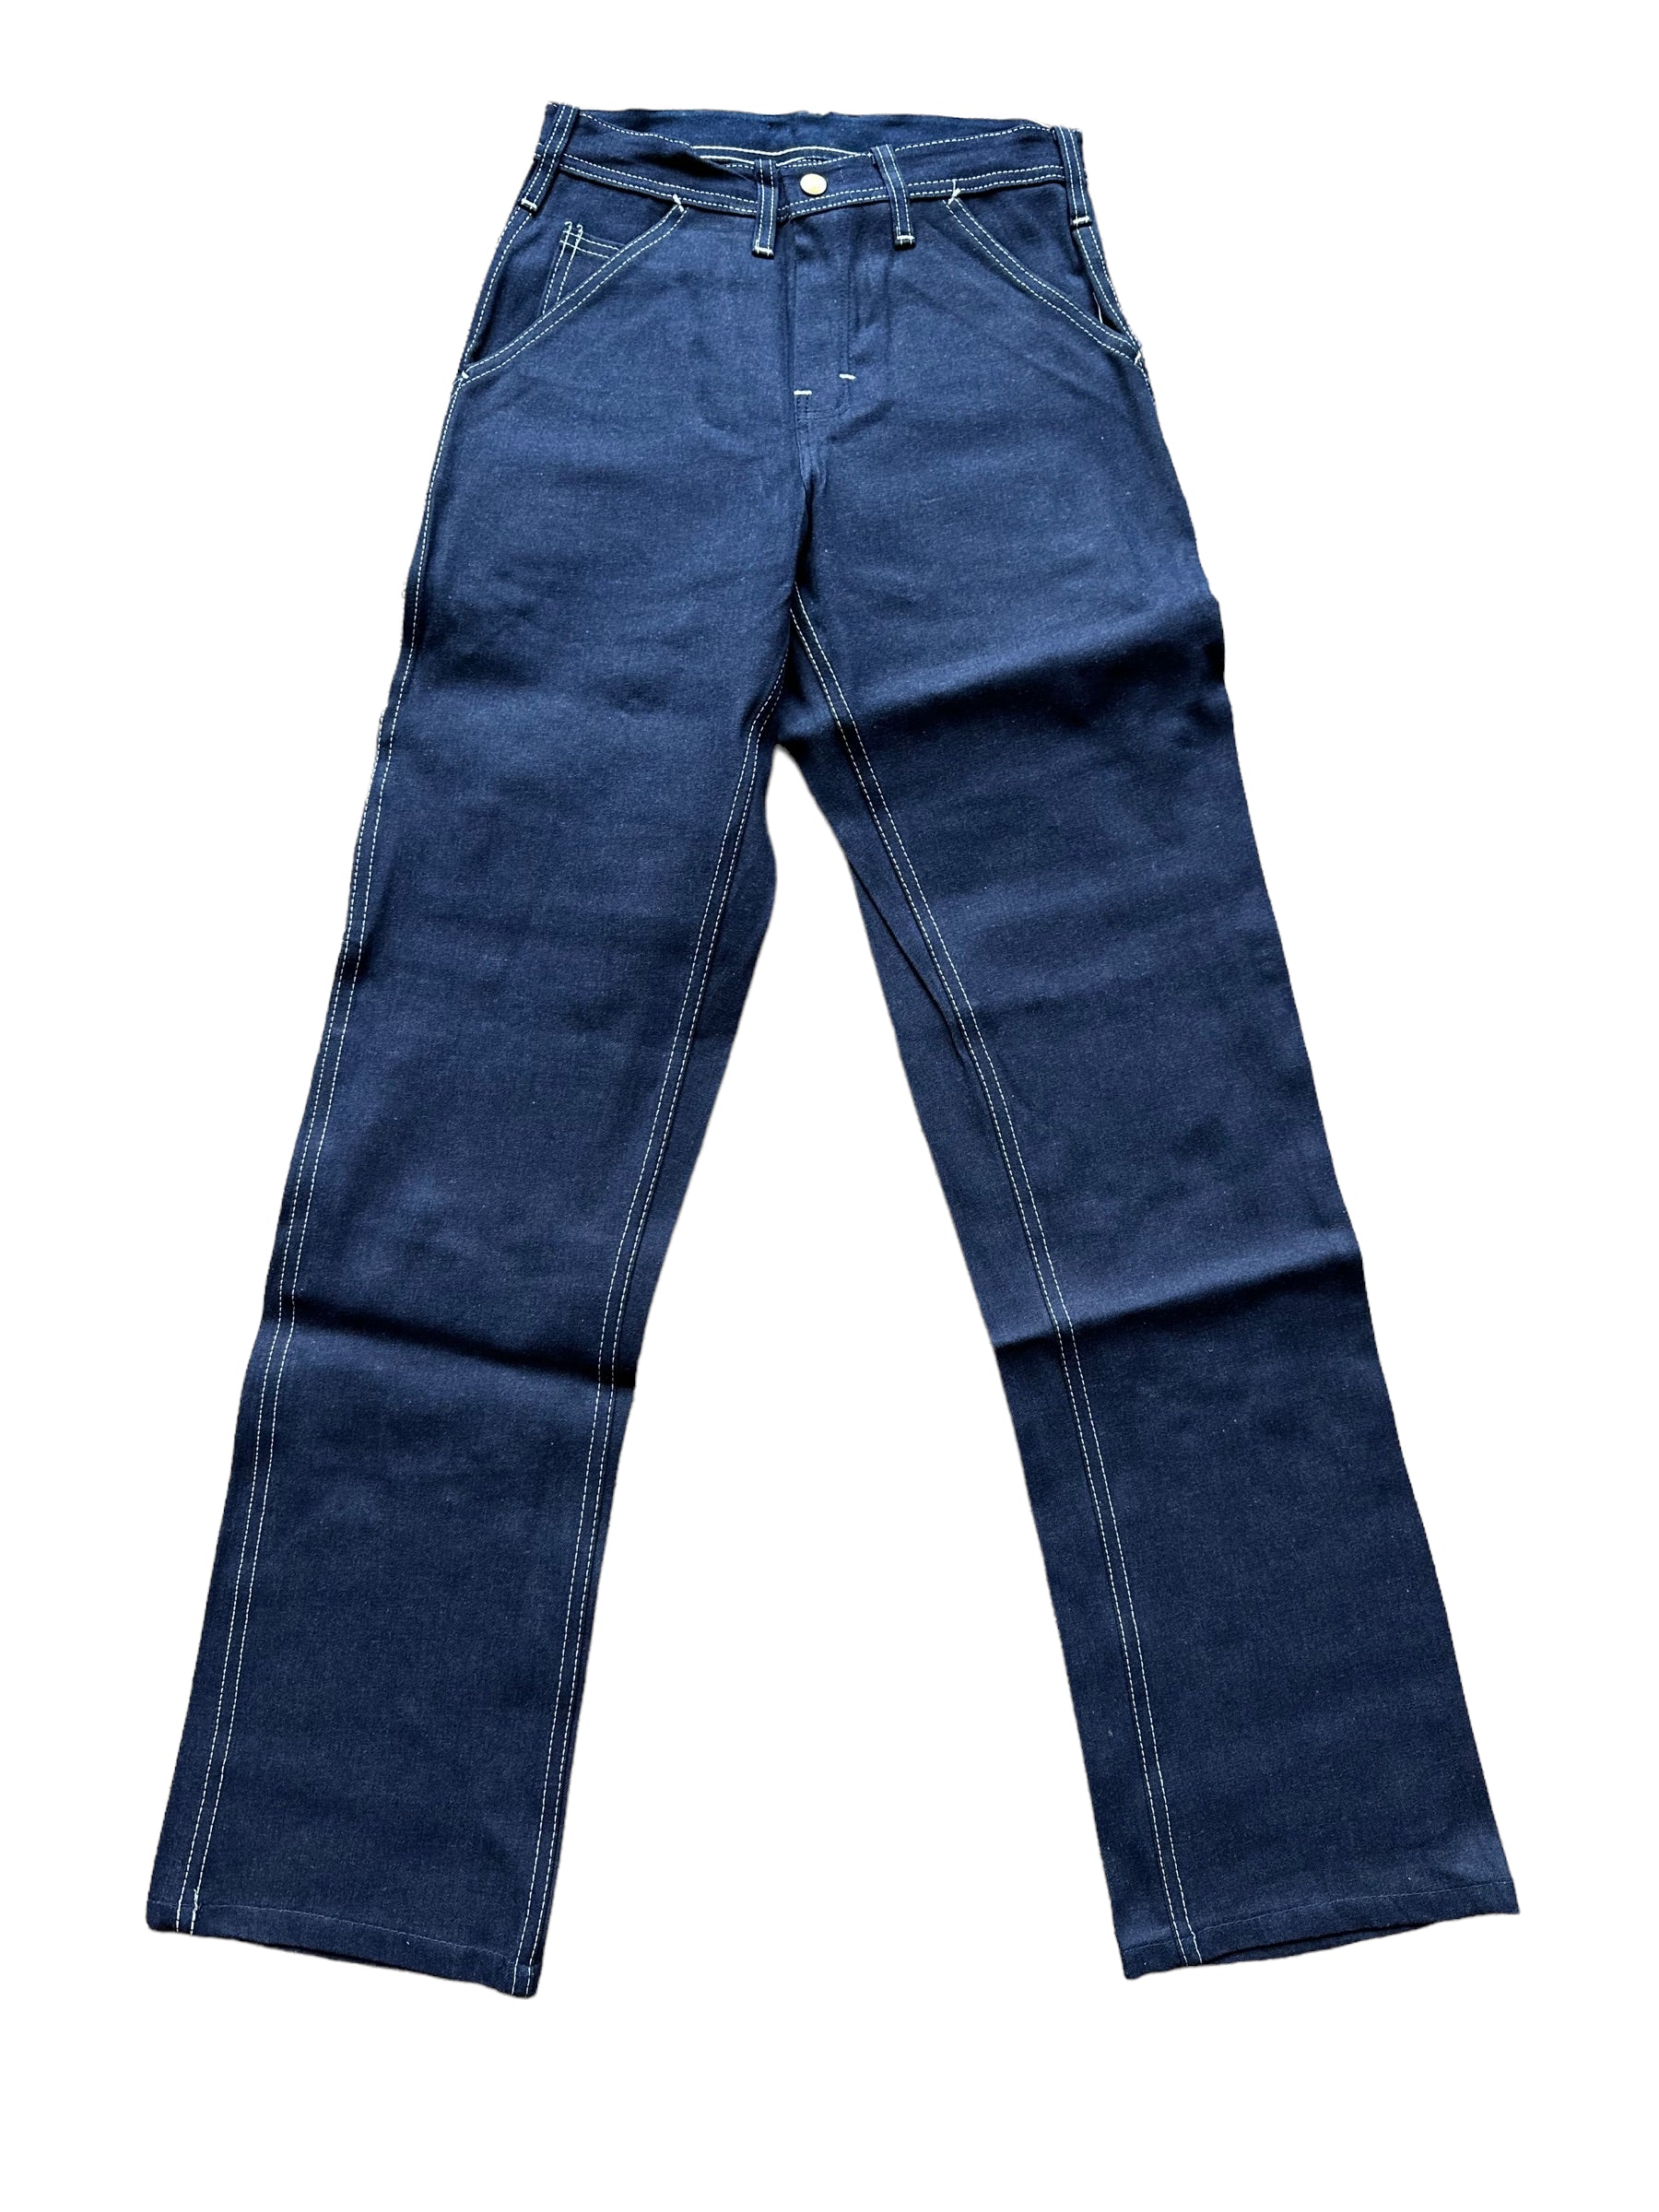 indruk Afwezigheid Perioperatieve periode NOS Vintage Carter's Carpenter Jeans W26 L32 | Vintage Workwear Seattl –  The Barn Owl